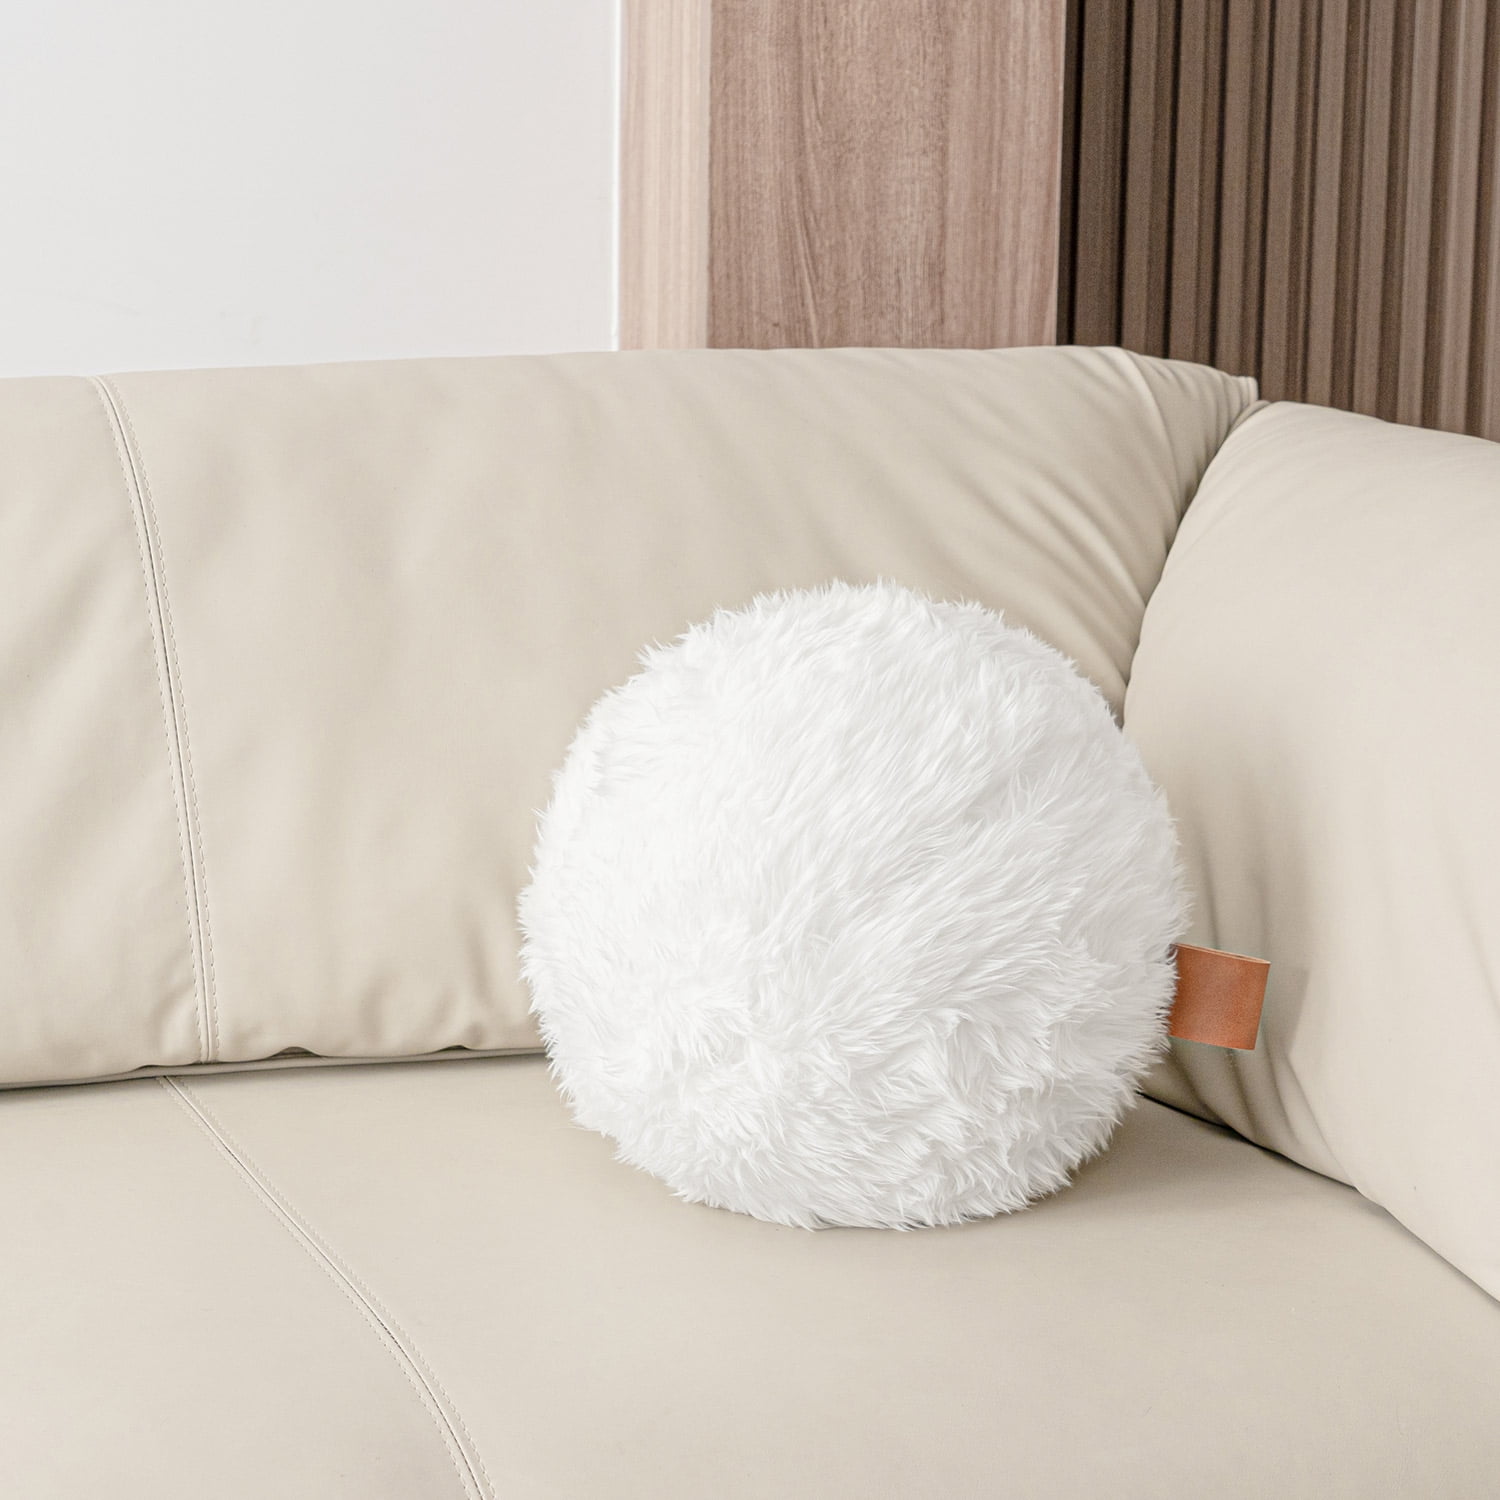  Snycler Hypebeast Room Decor,Off White Inspired Pillow